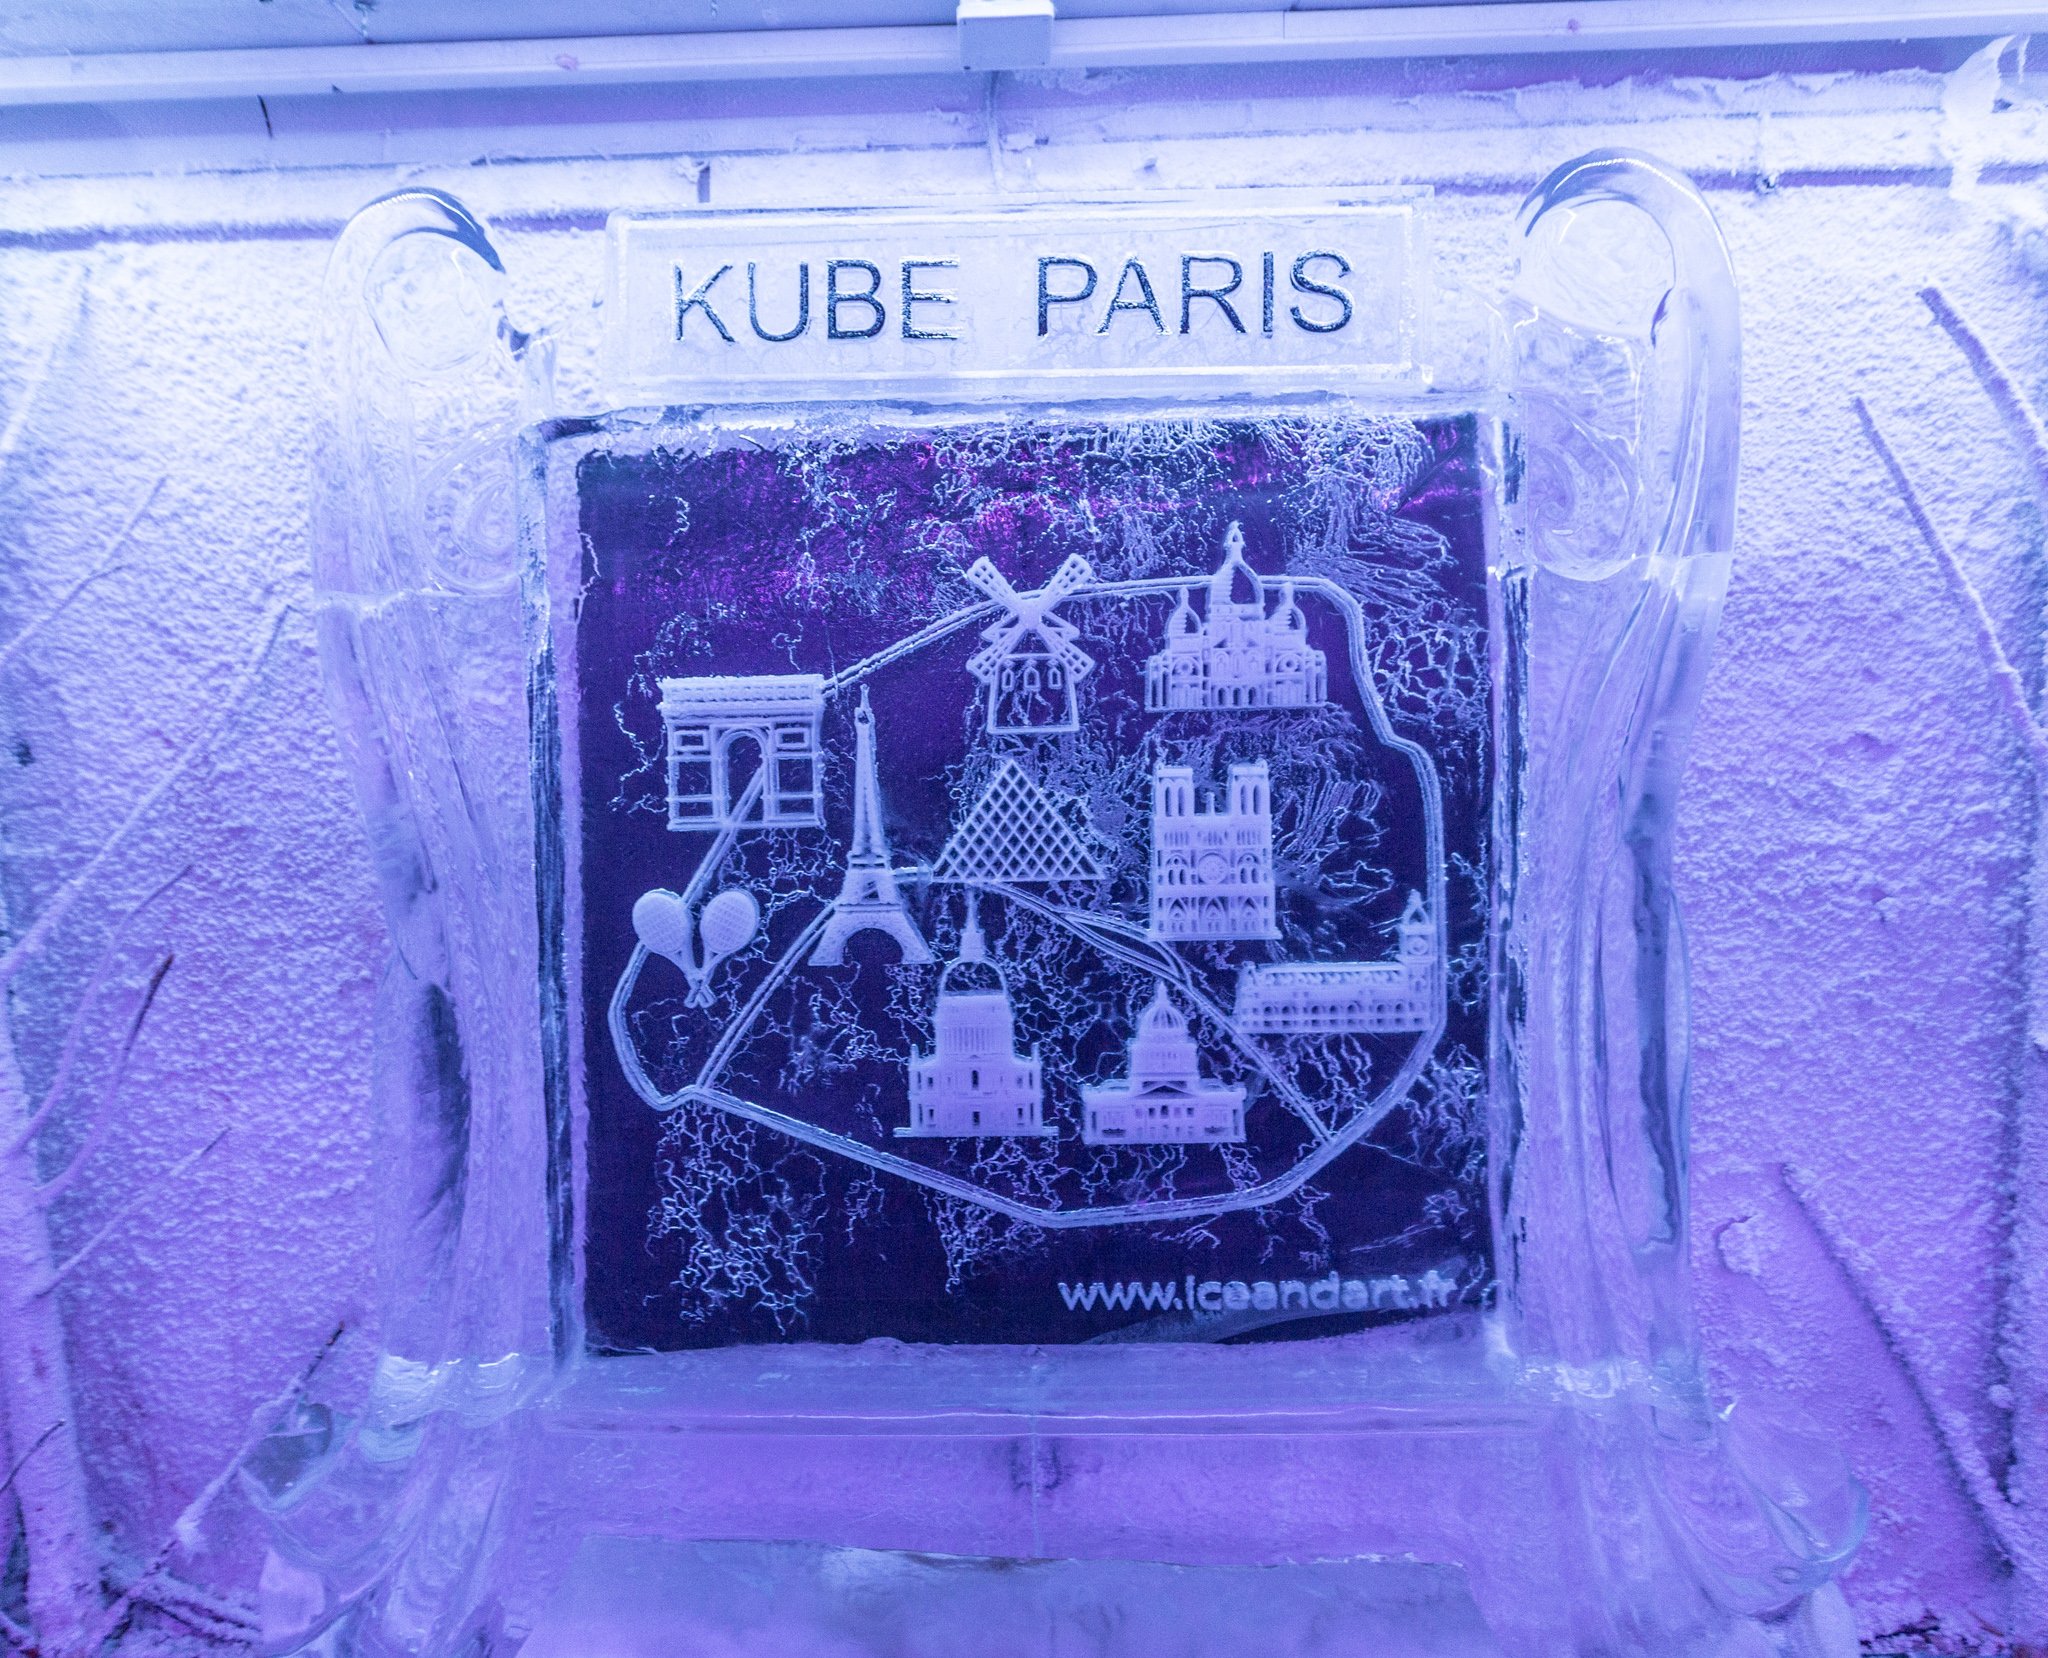 Kube Hotel Paris-Experience-Ice Bar-Unusual